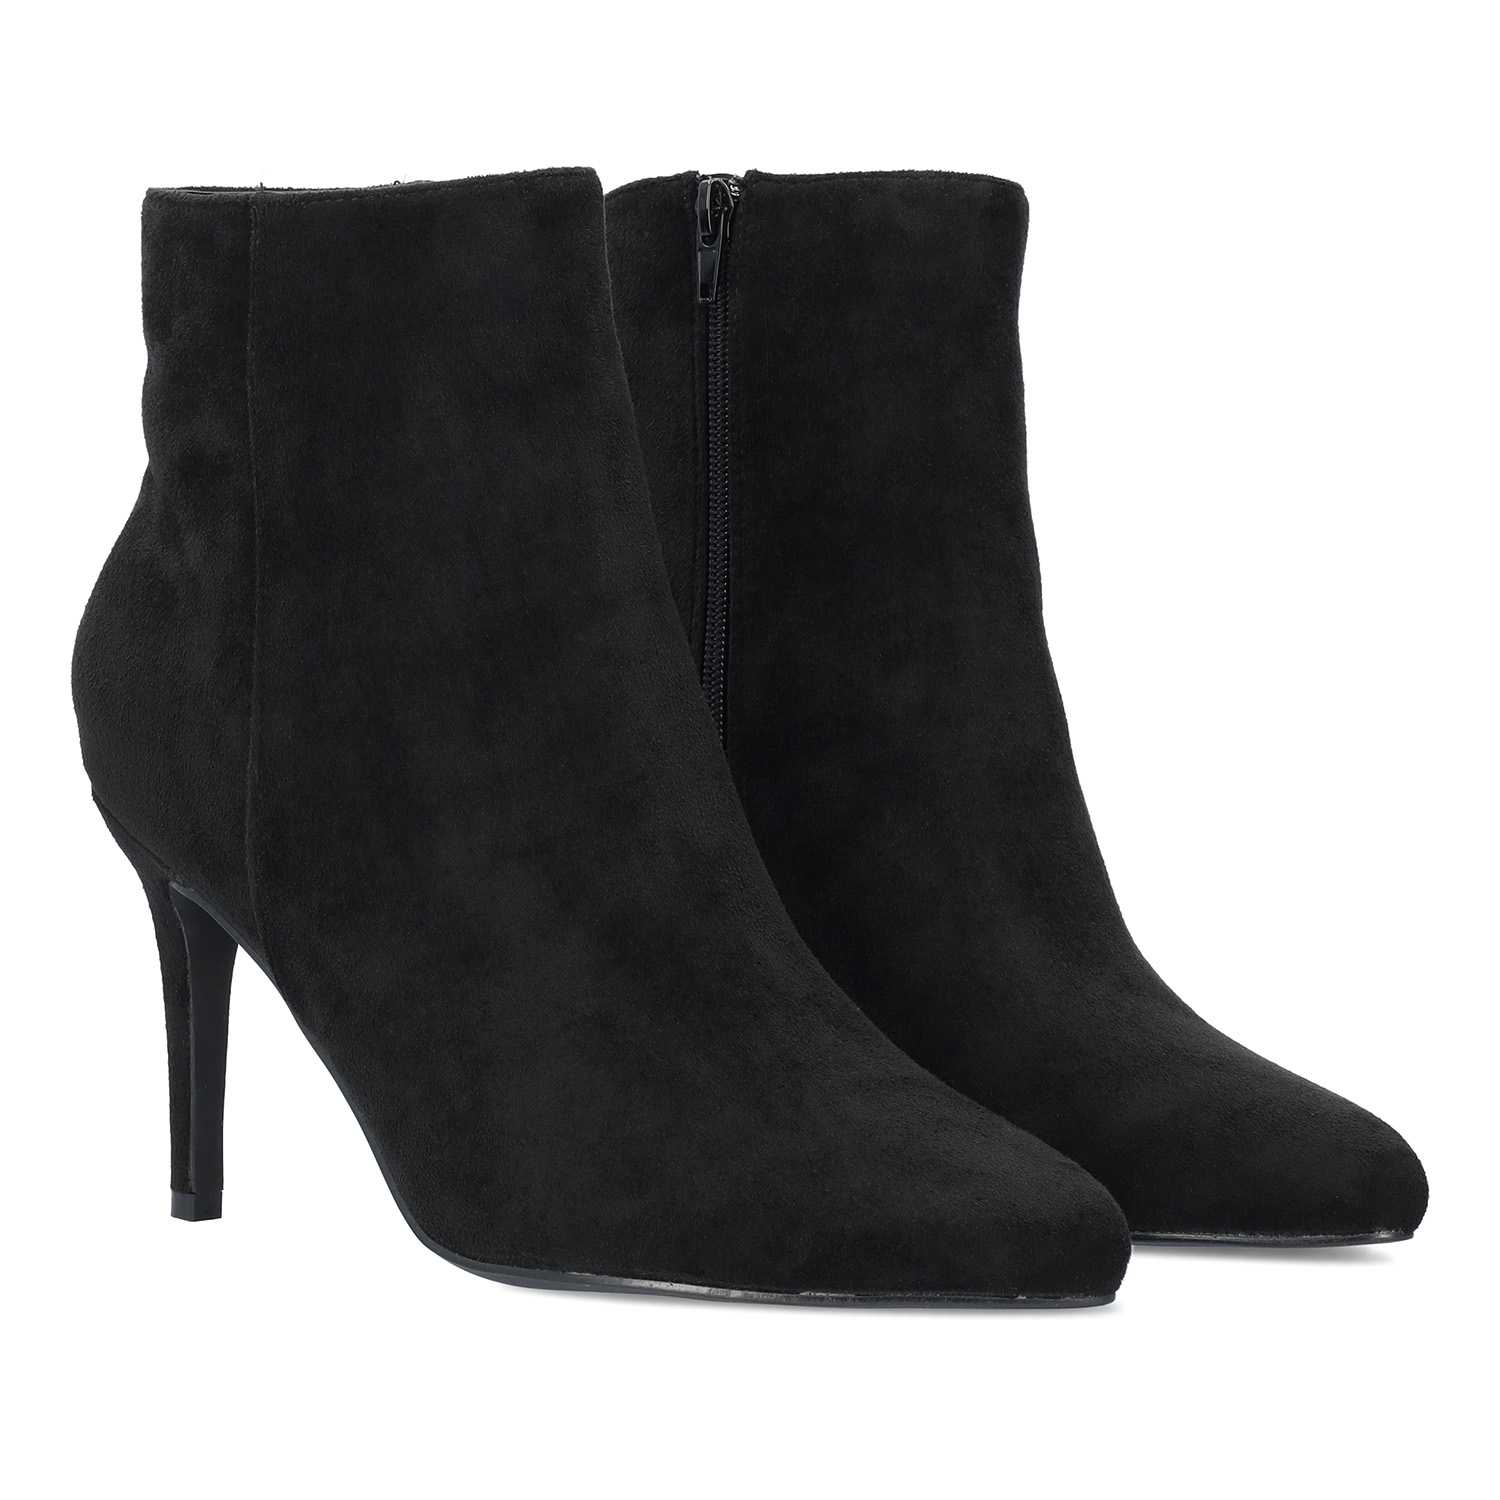 High-heeled booties in black faux suede